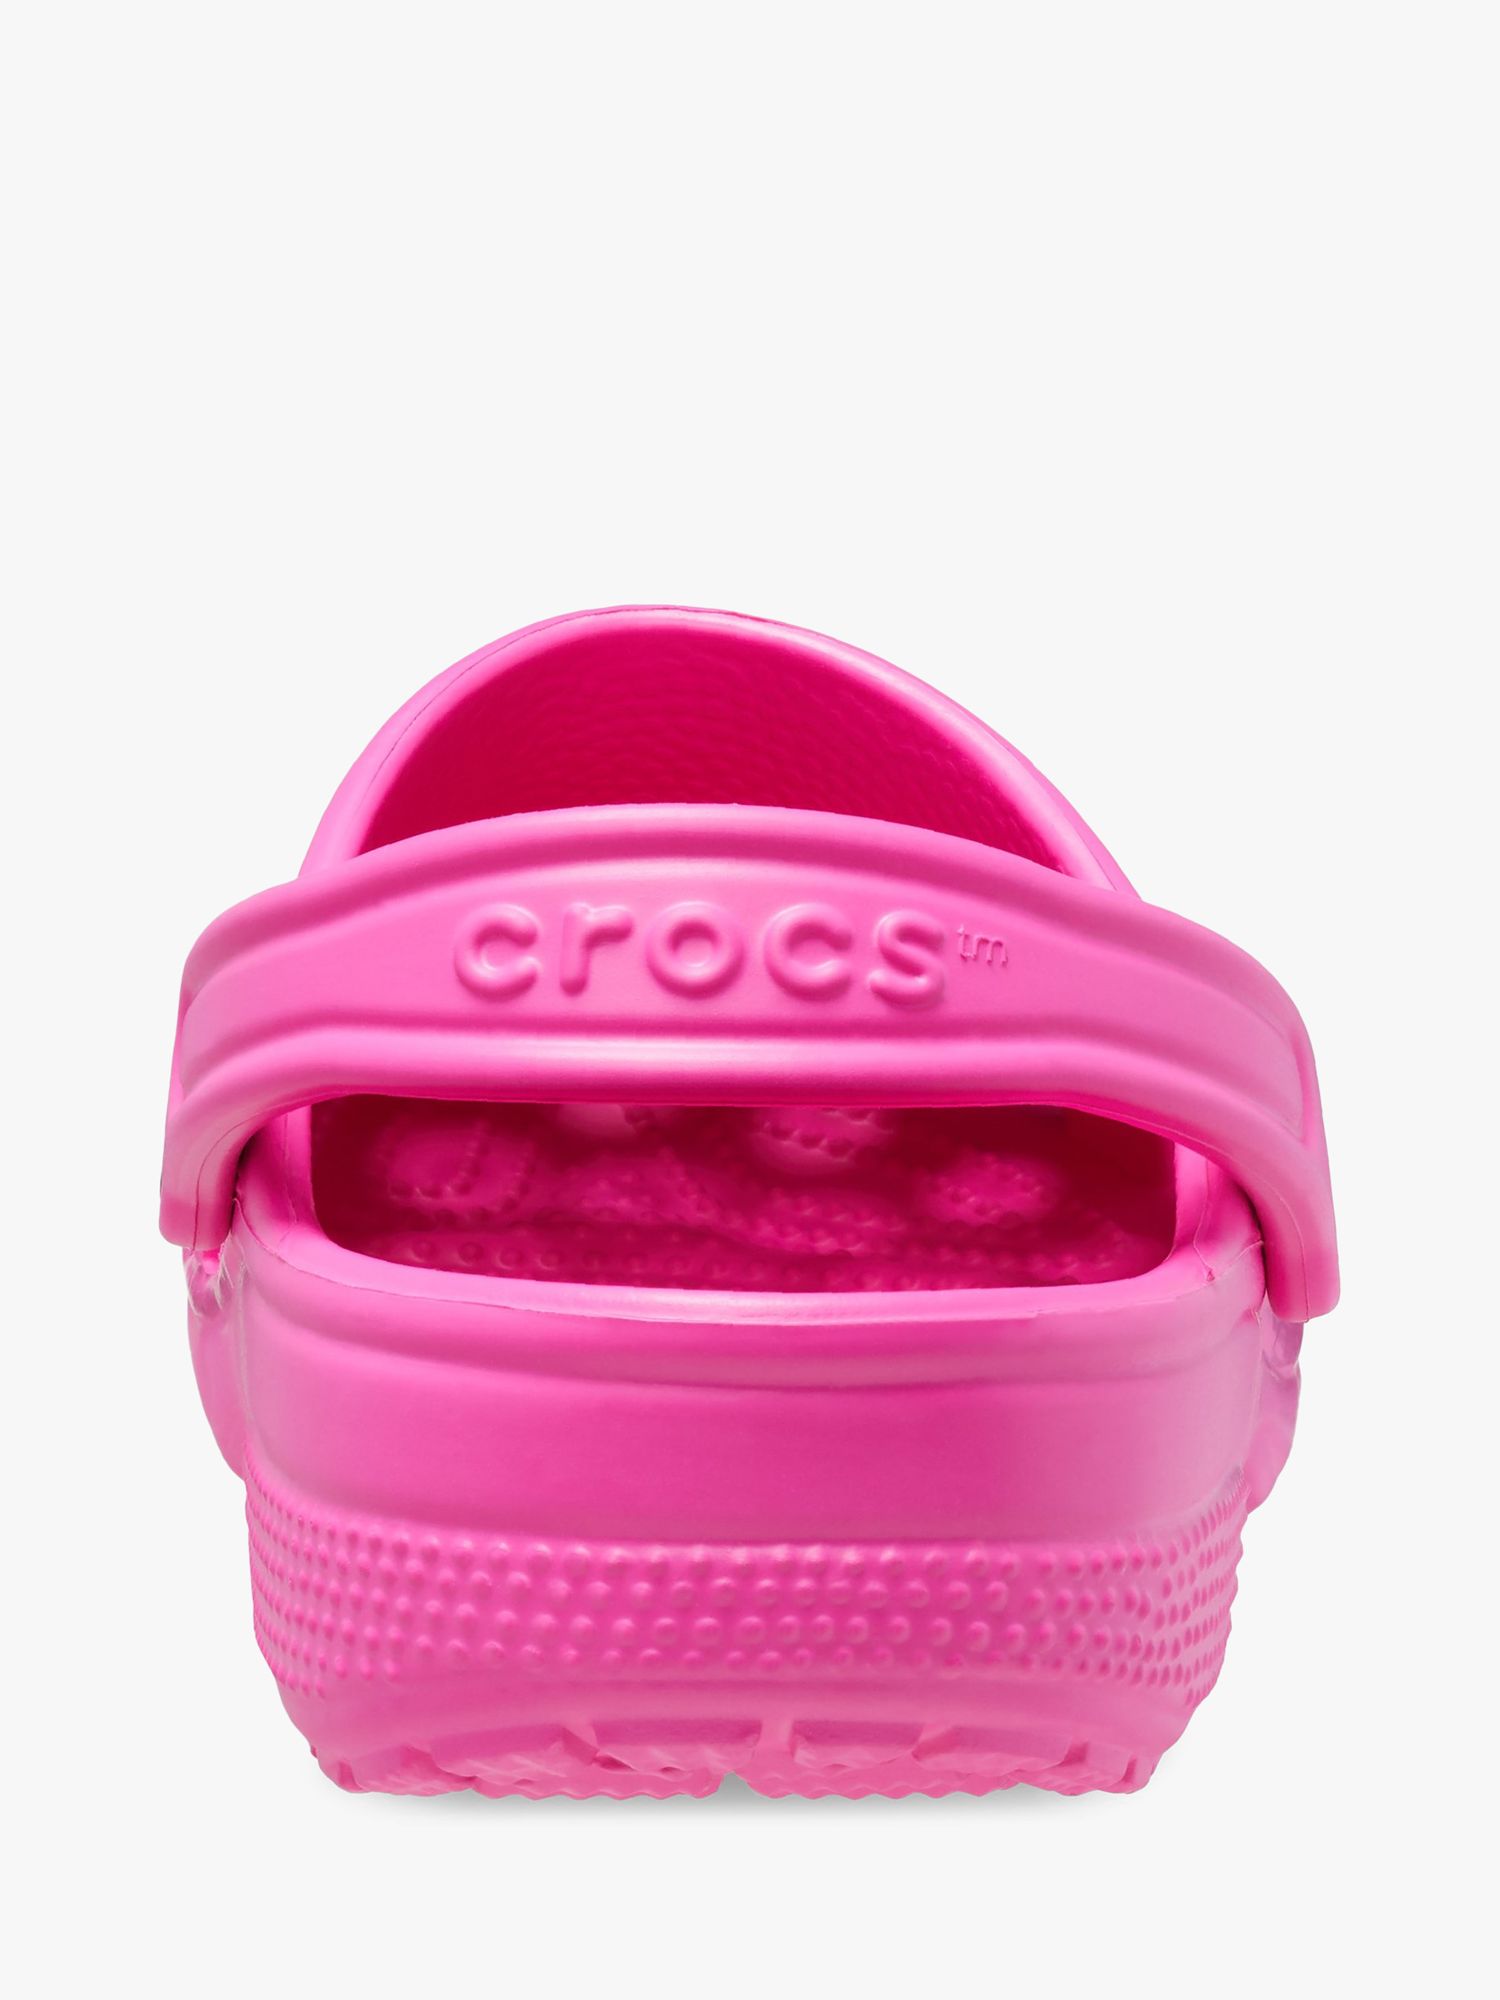 Crocs Classic Clogs, Pink, 5